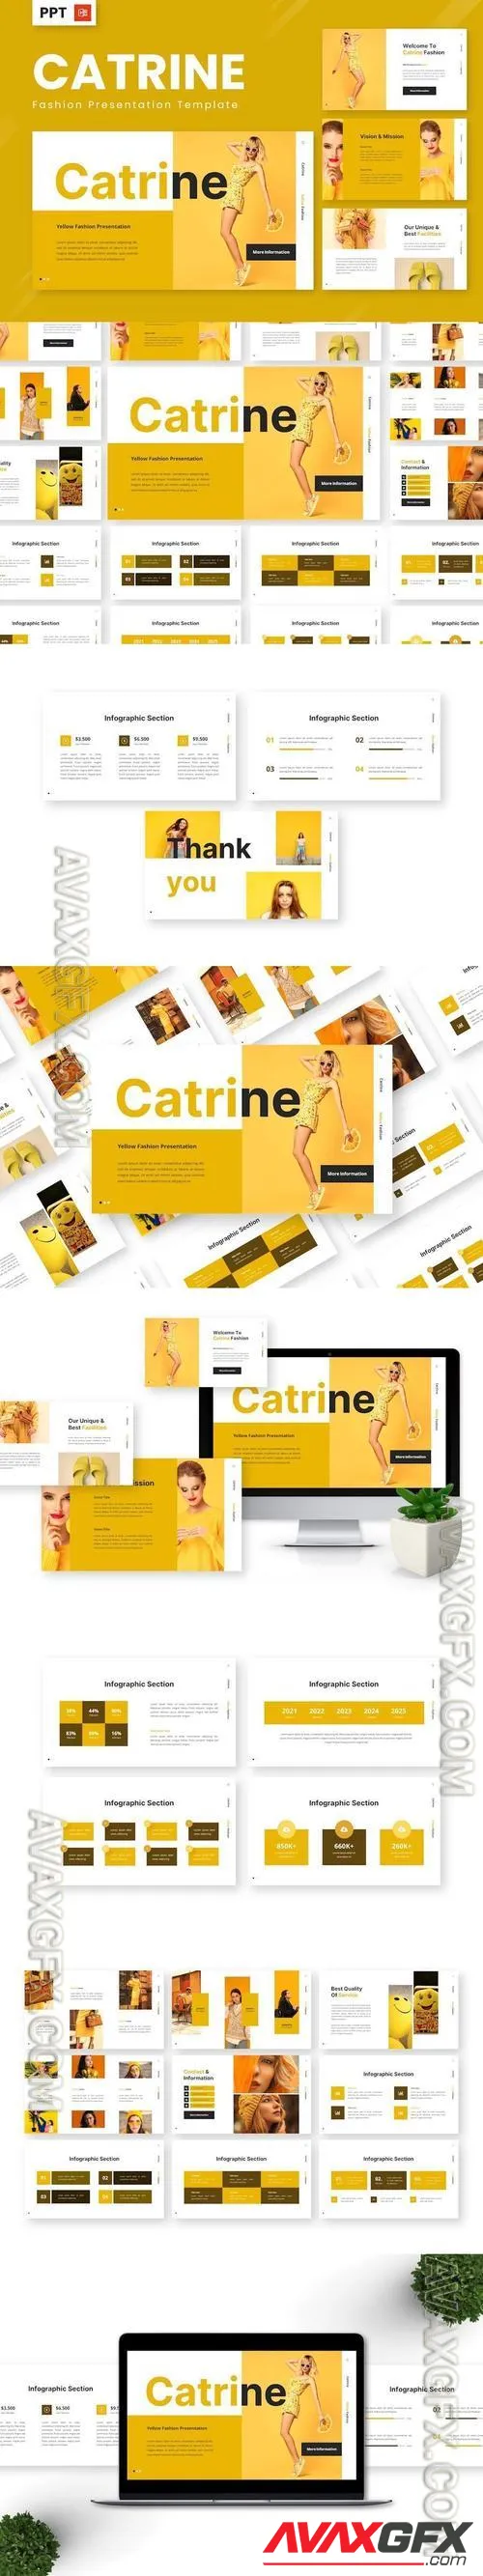 Catrine - Fashion Powerpoint Templates